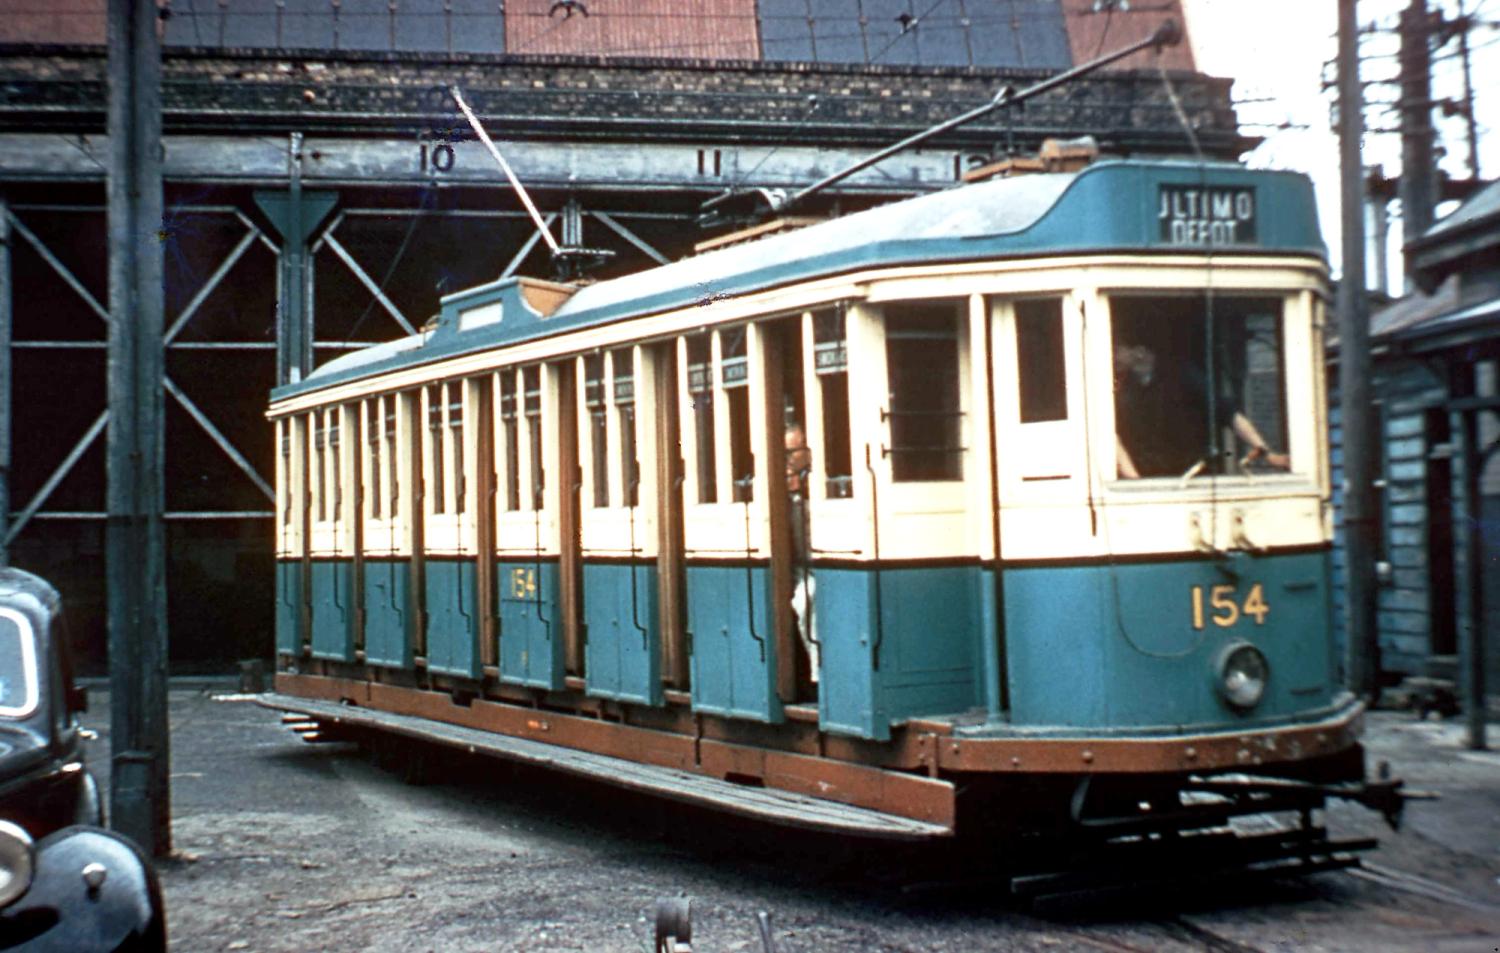 Vintage colour photograph of tram car outside yard